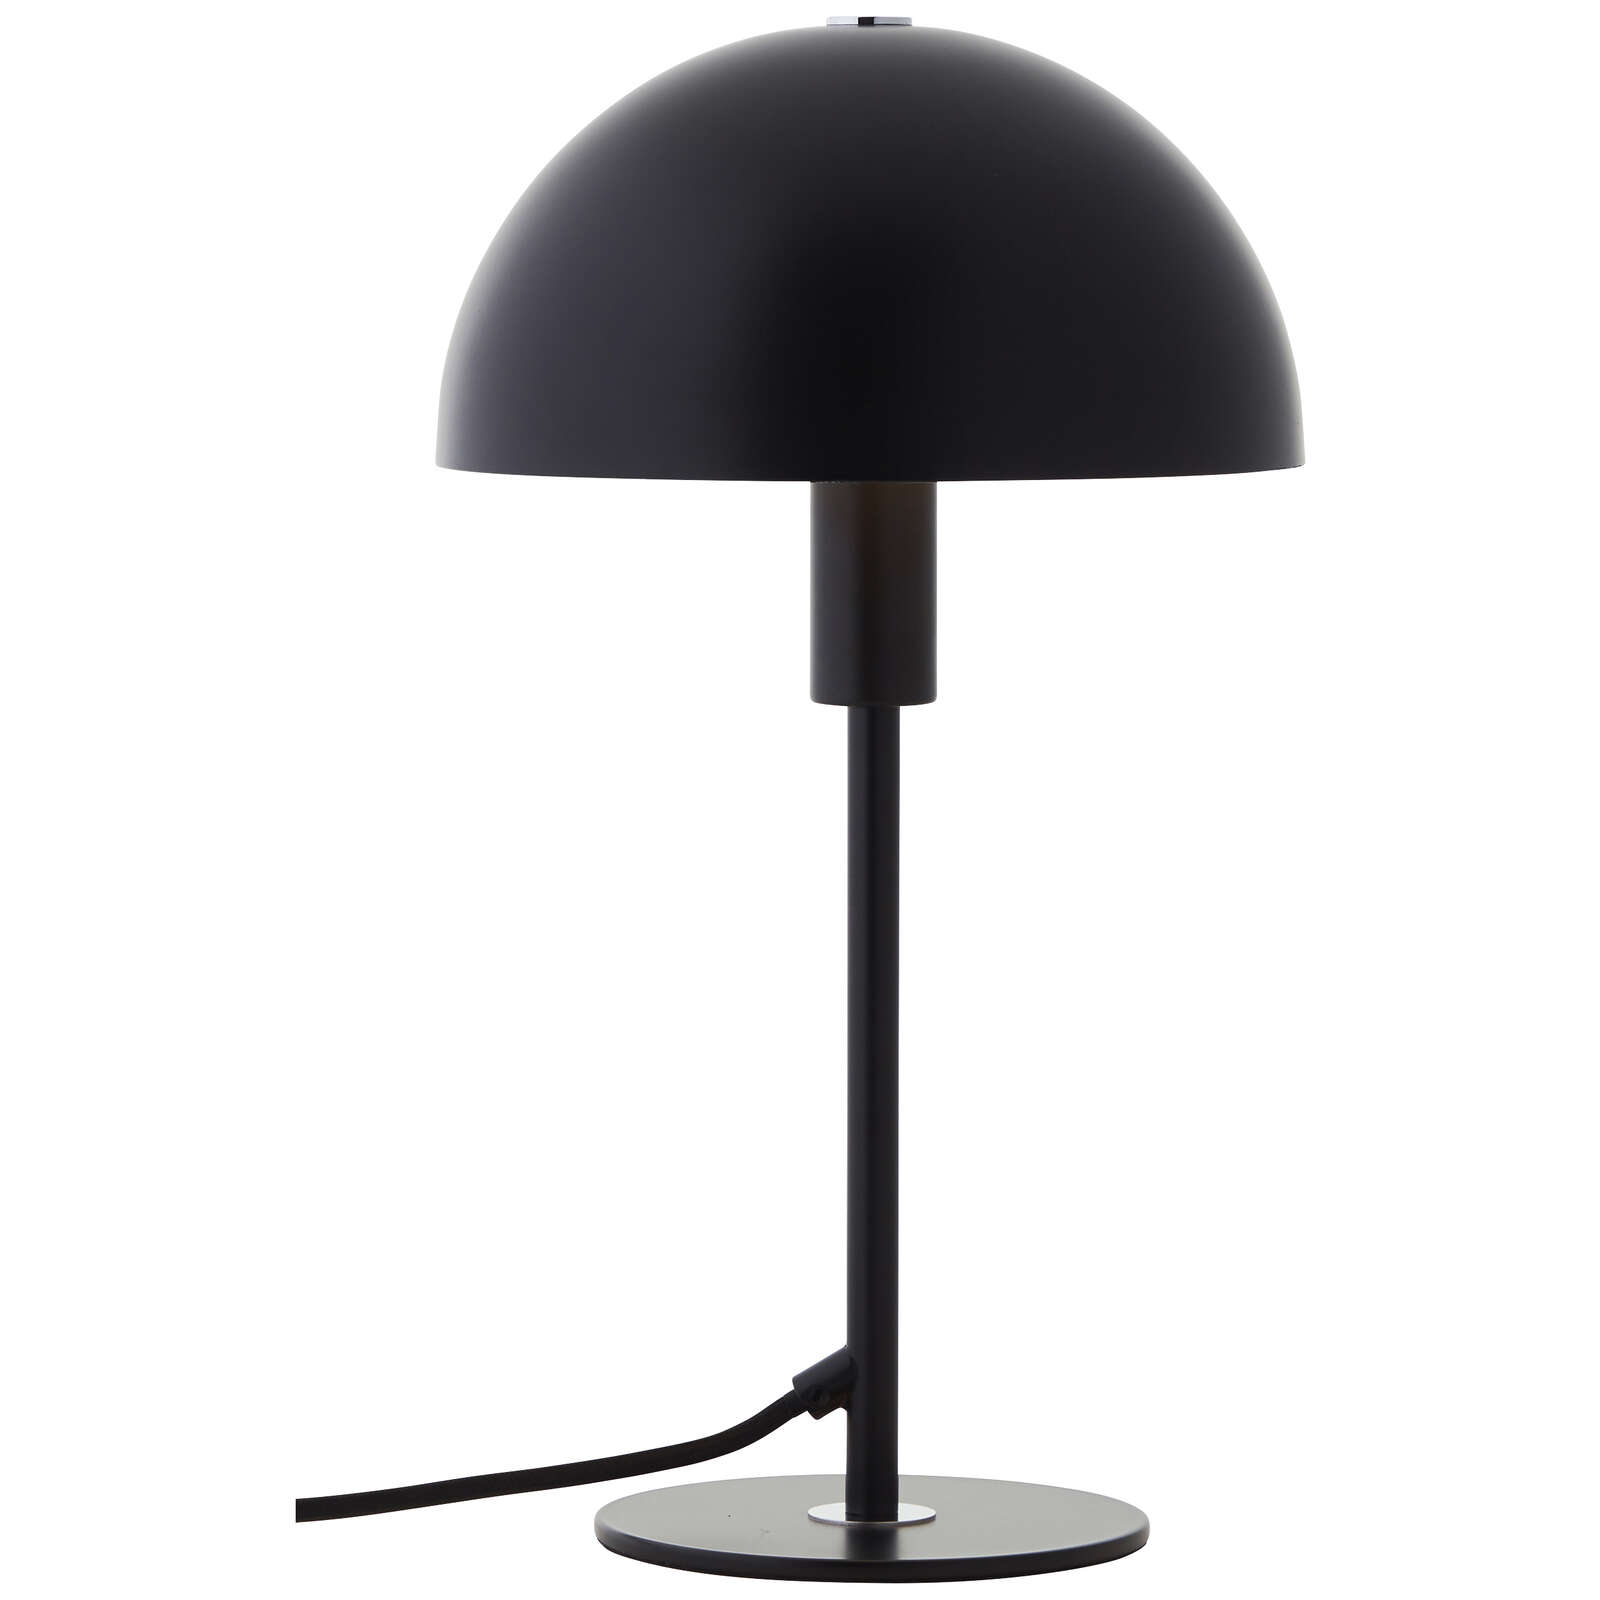             Lampe de table en métal - Lasse 4 - Noir
        